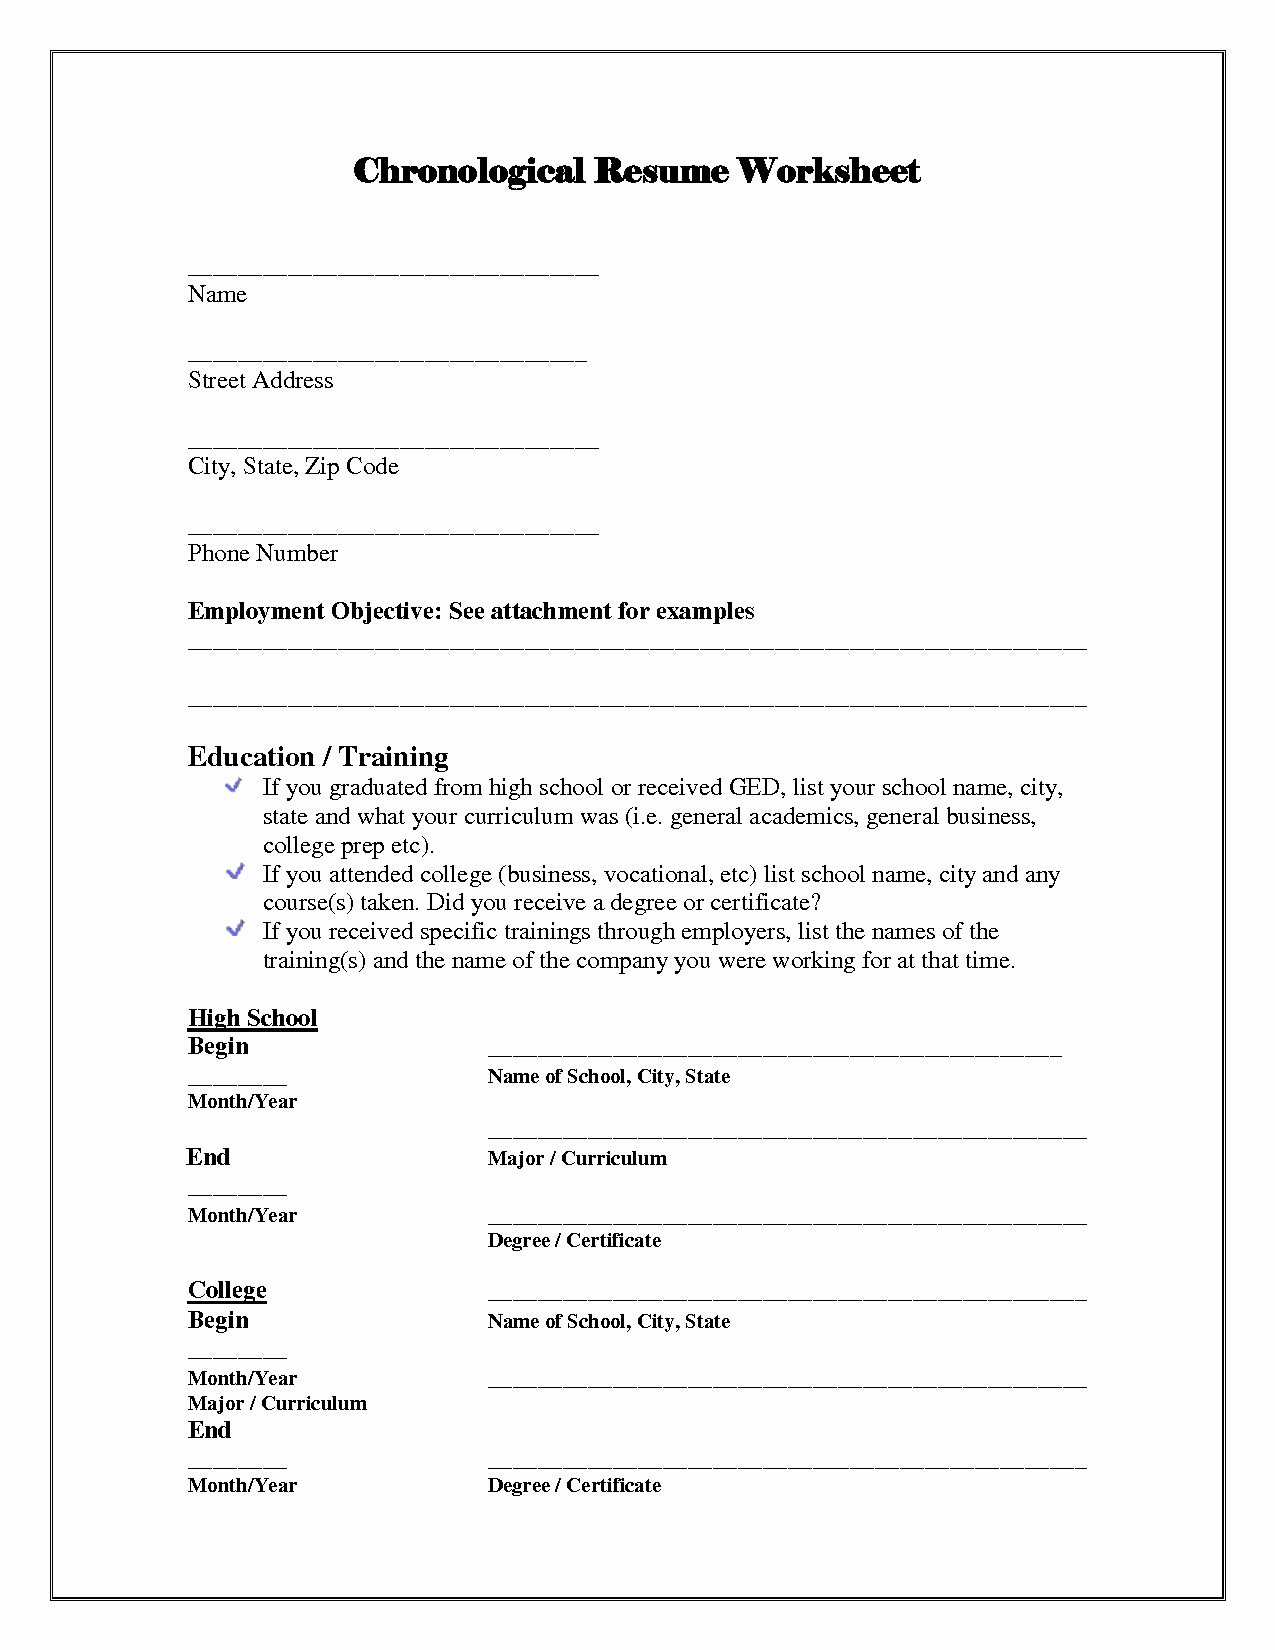 Resume Worksheet for Adults Lovely Resume Building Worksheet